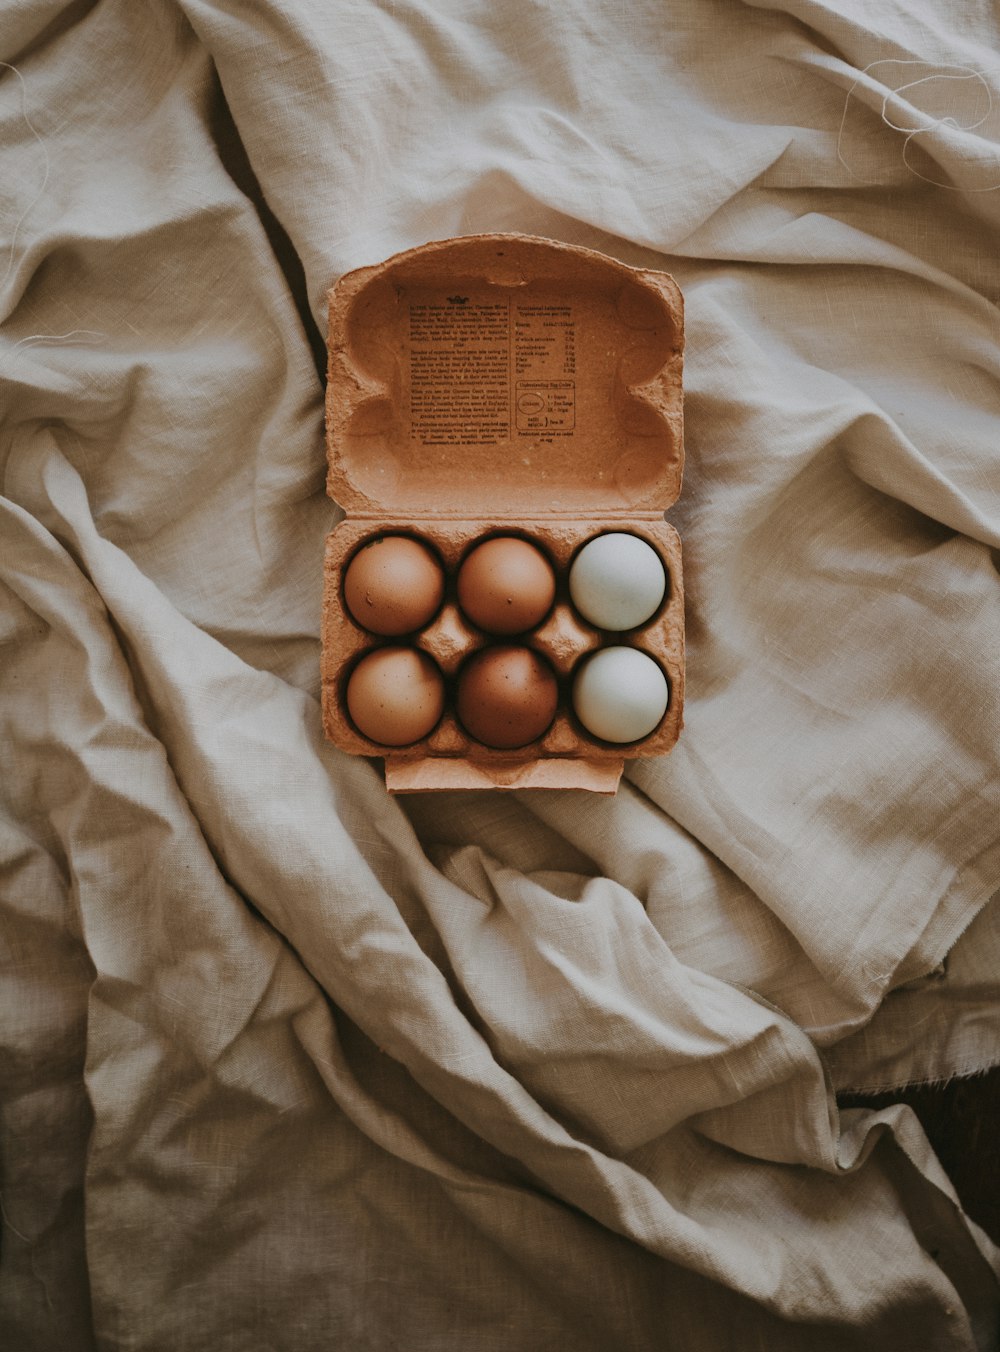 six eggs in box